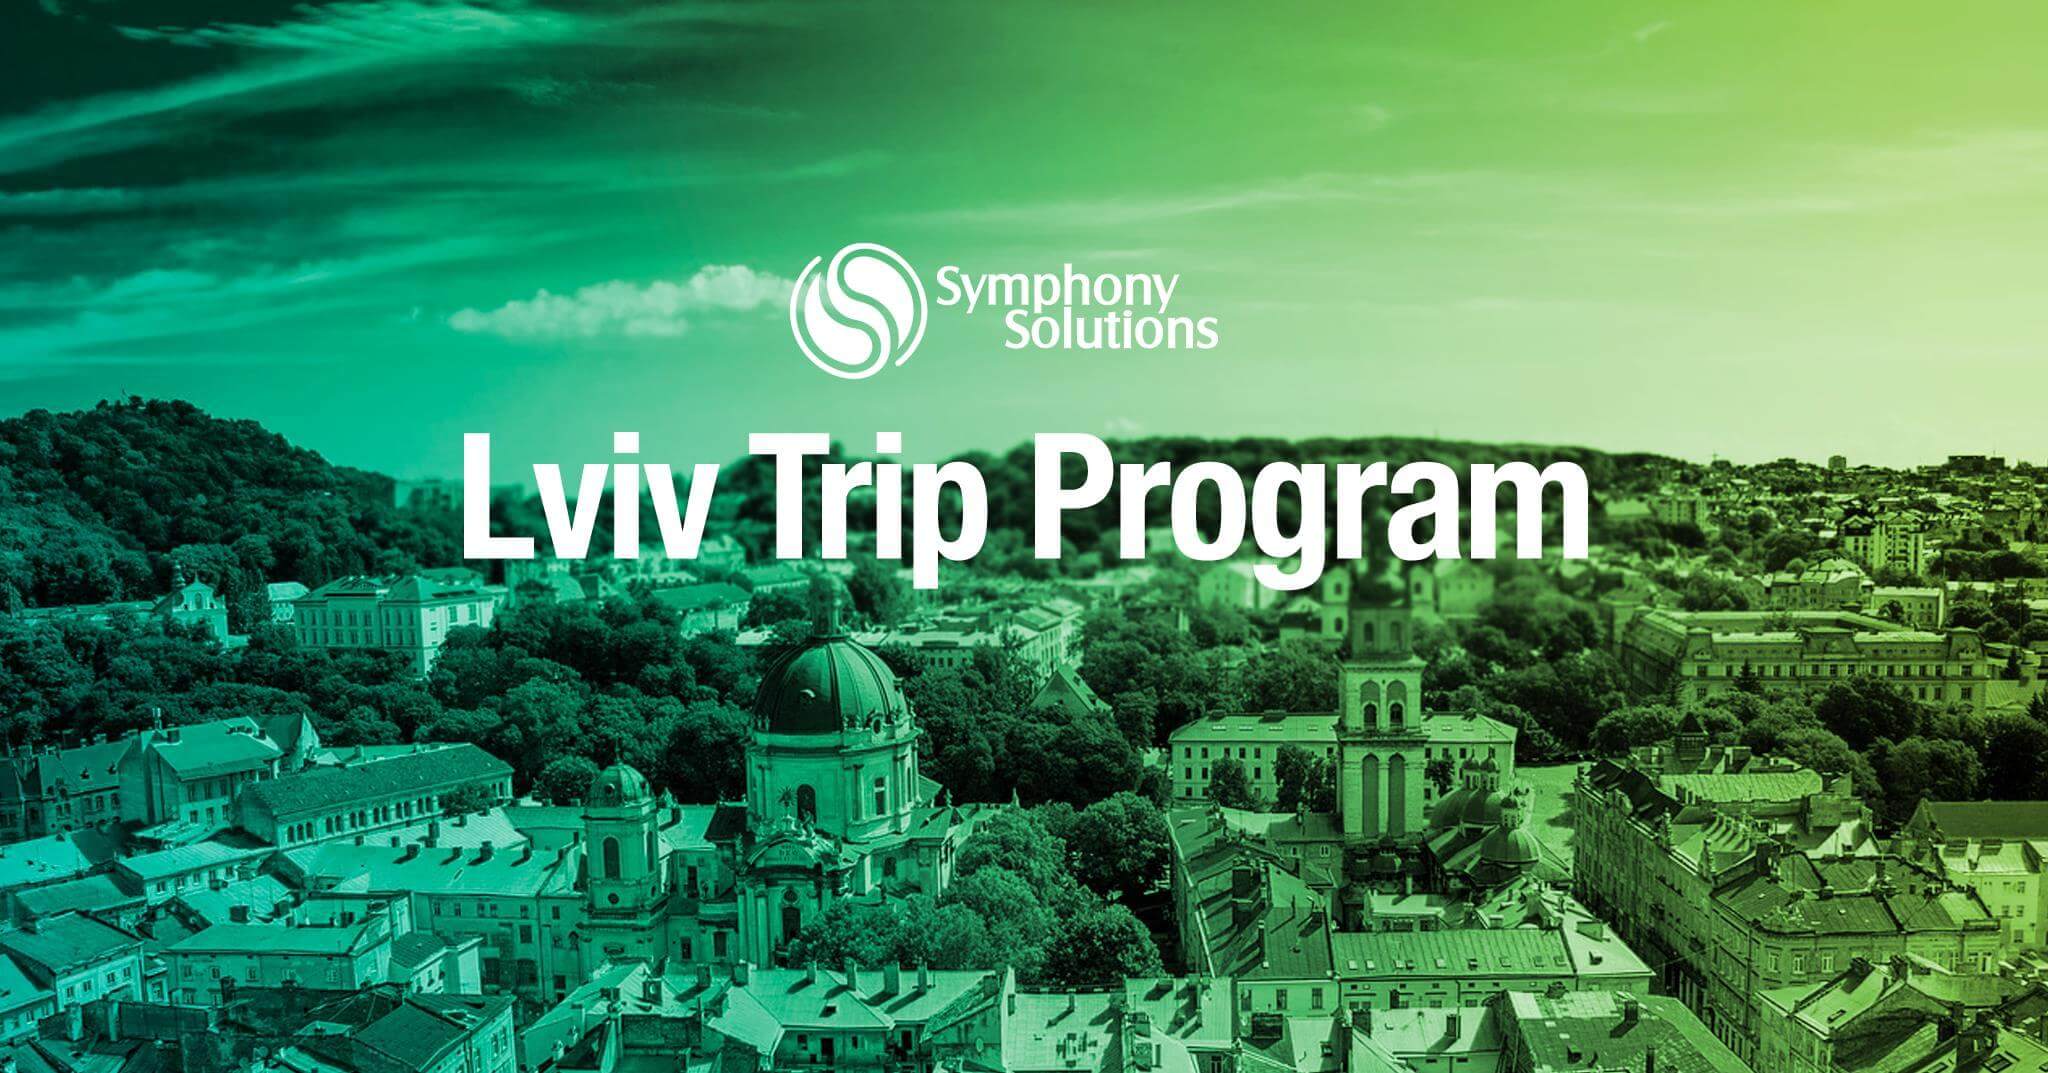 Lviv trip program